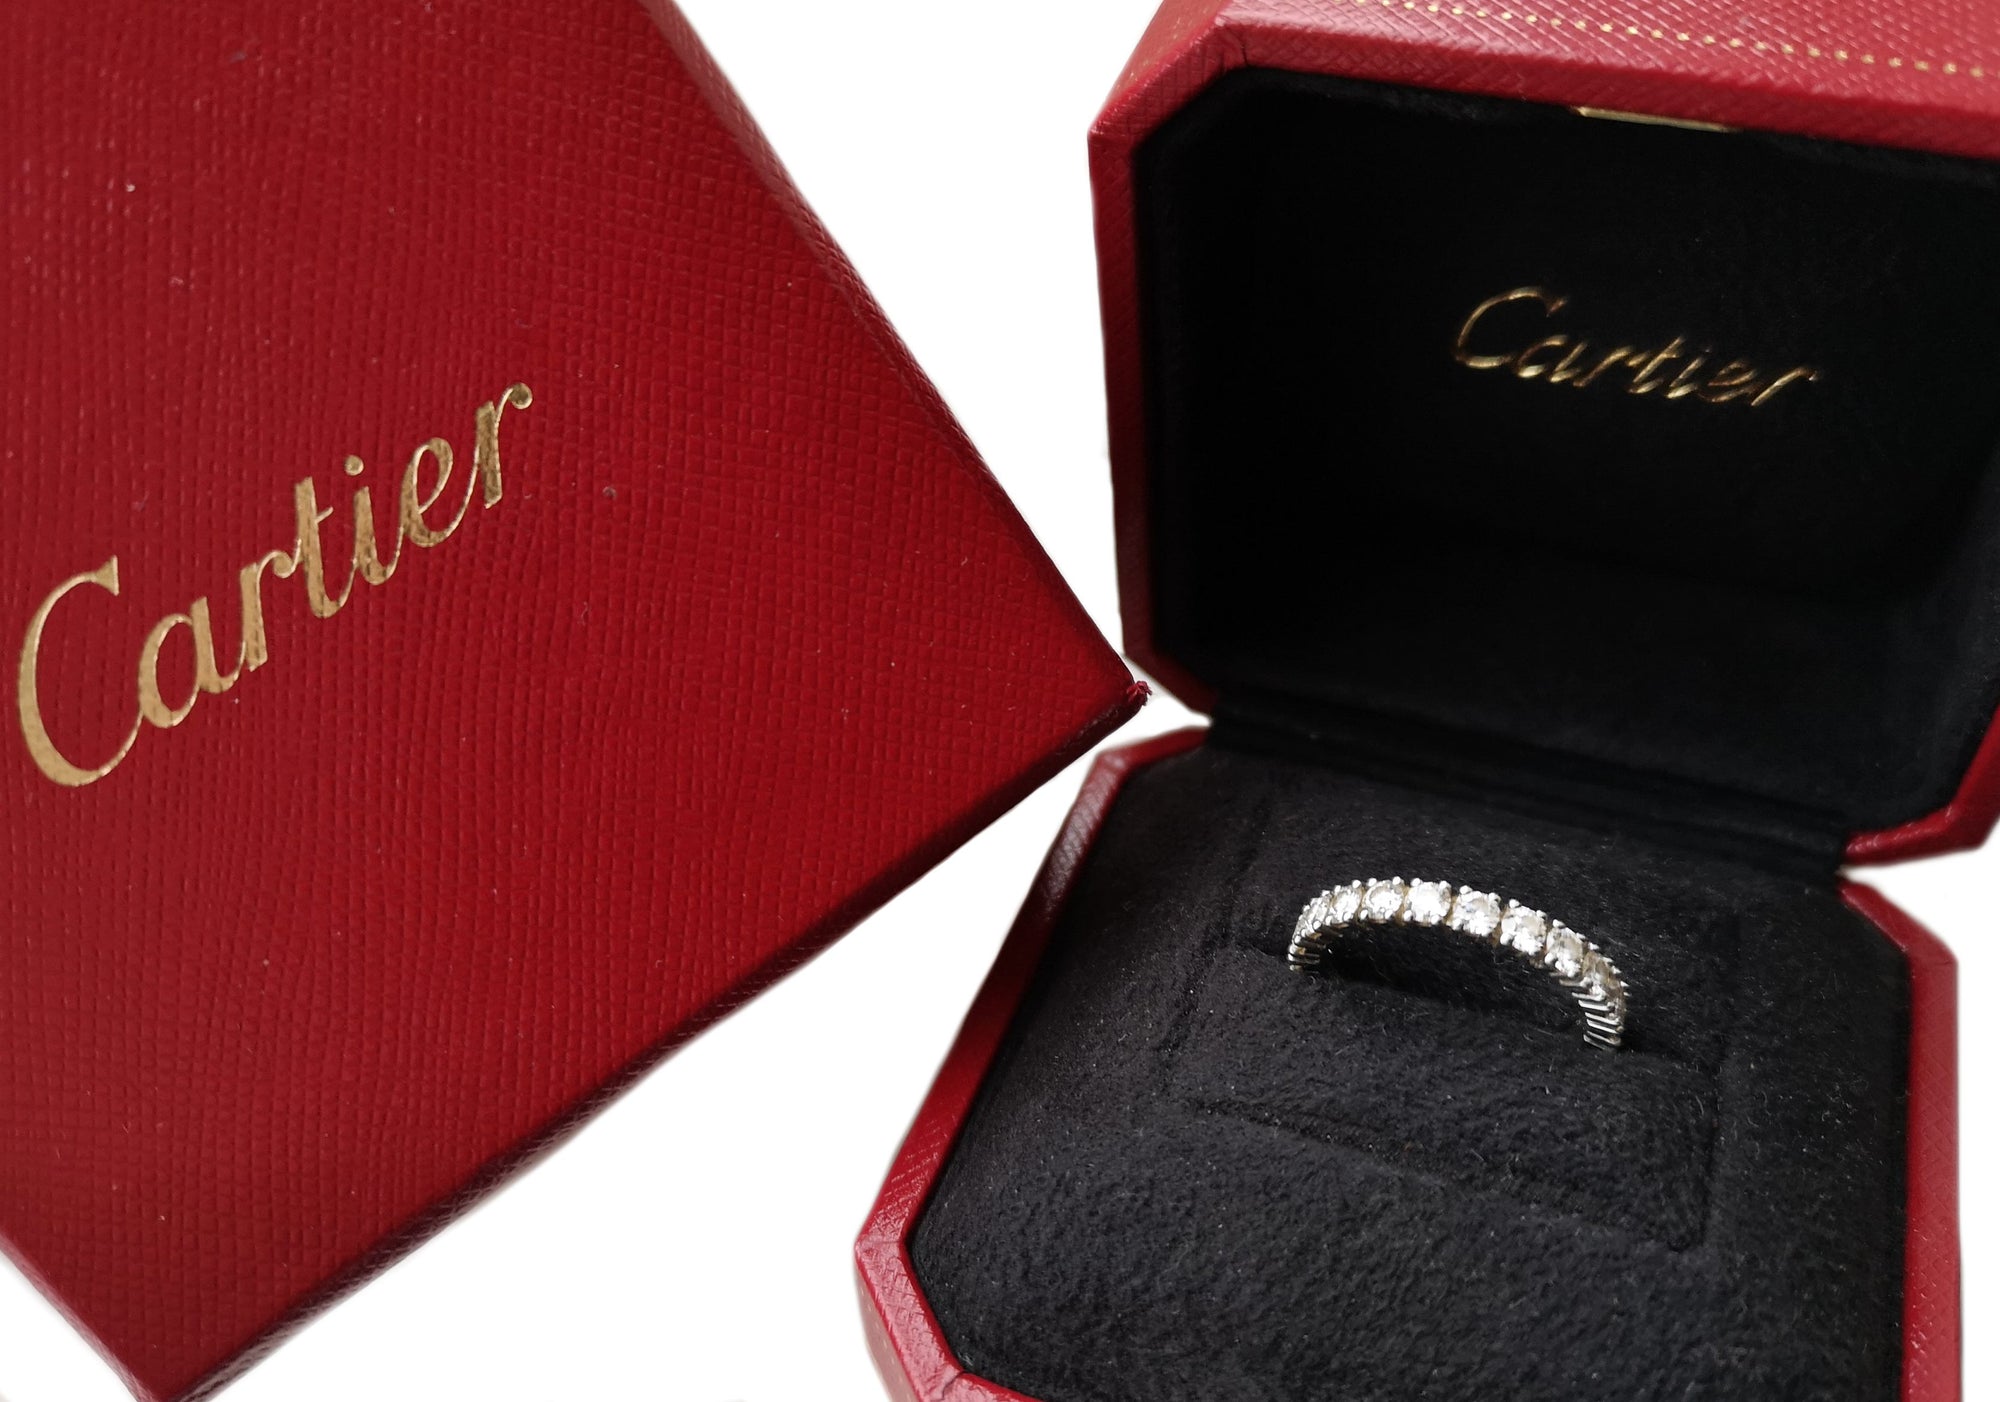 Cartier Destinee 1.54ct Diamond Wedding Band SZ 52